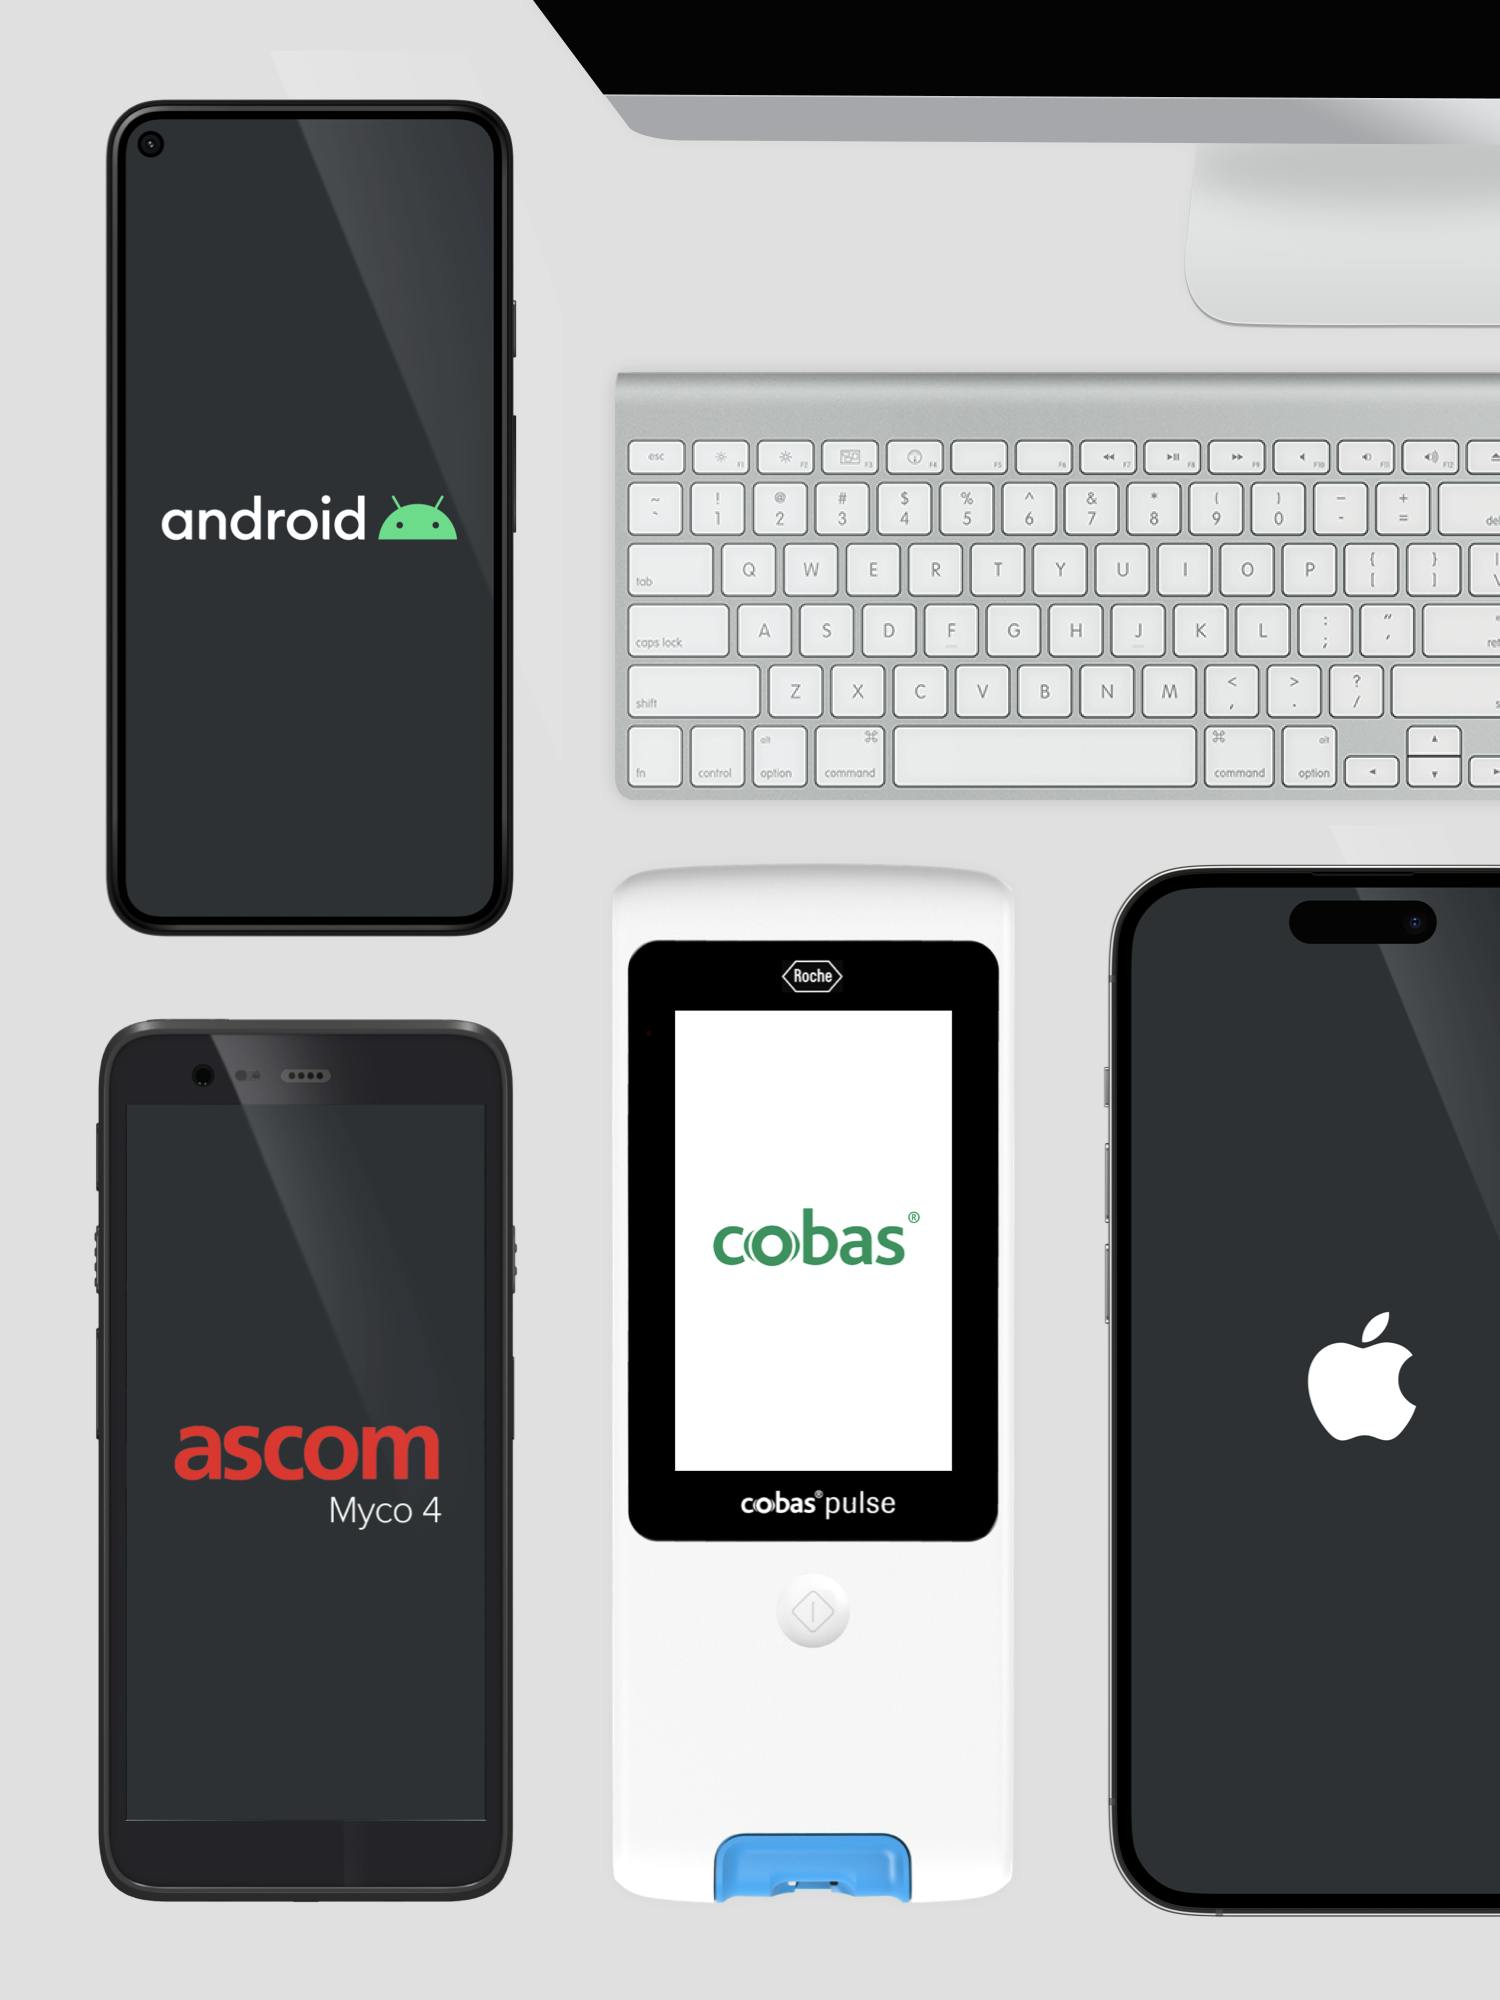 imitoWound App - runs on iOS, Android, Ascom Myco 4, Roche Cobas Pulse, Desktop, Web